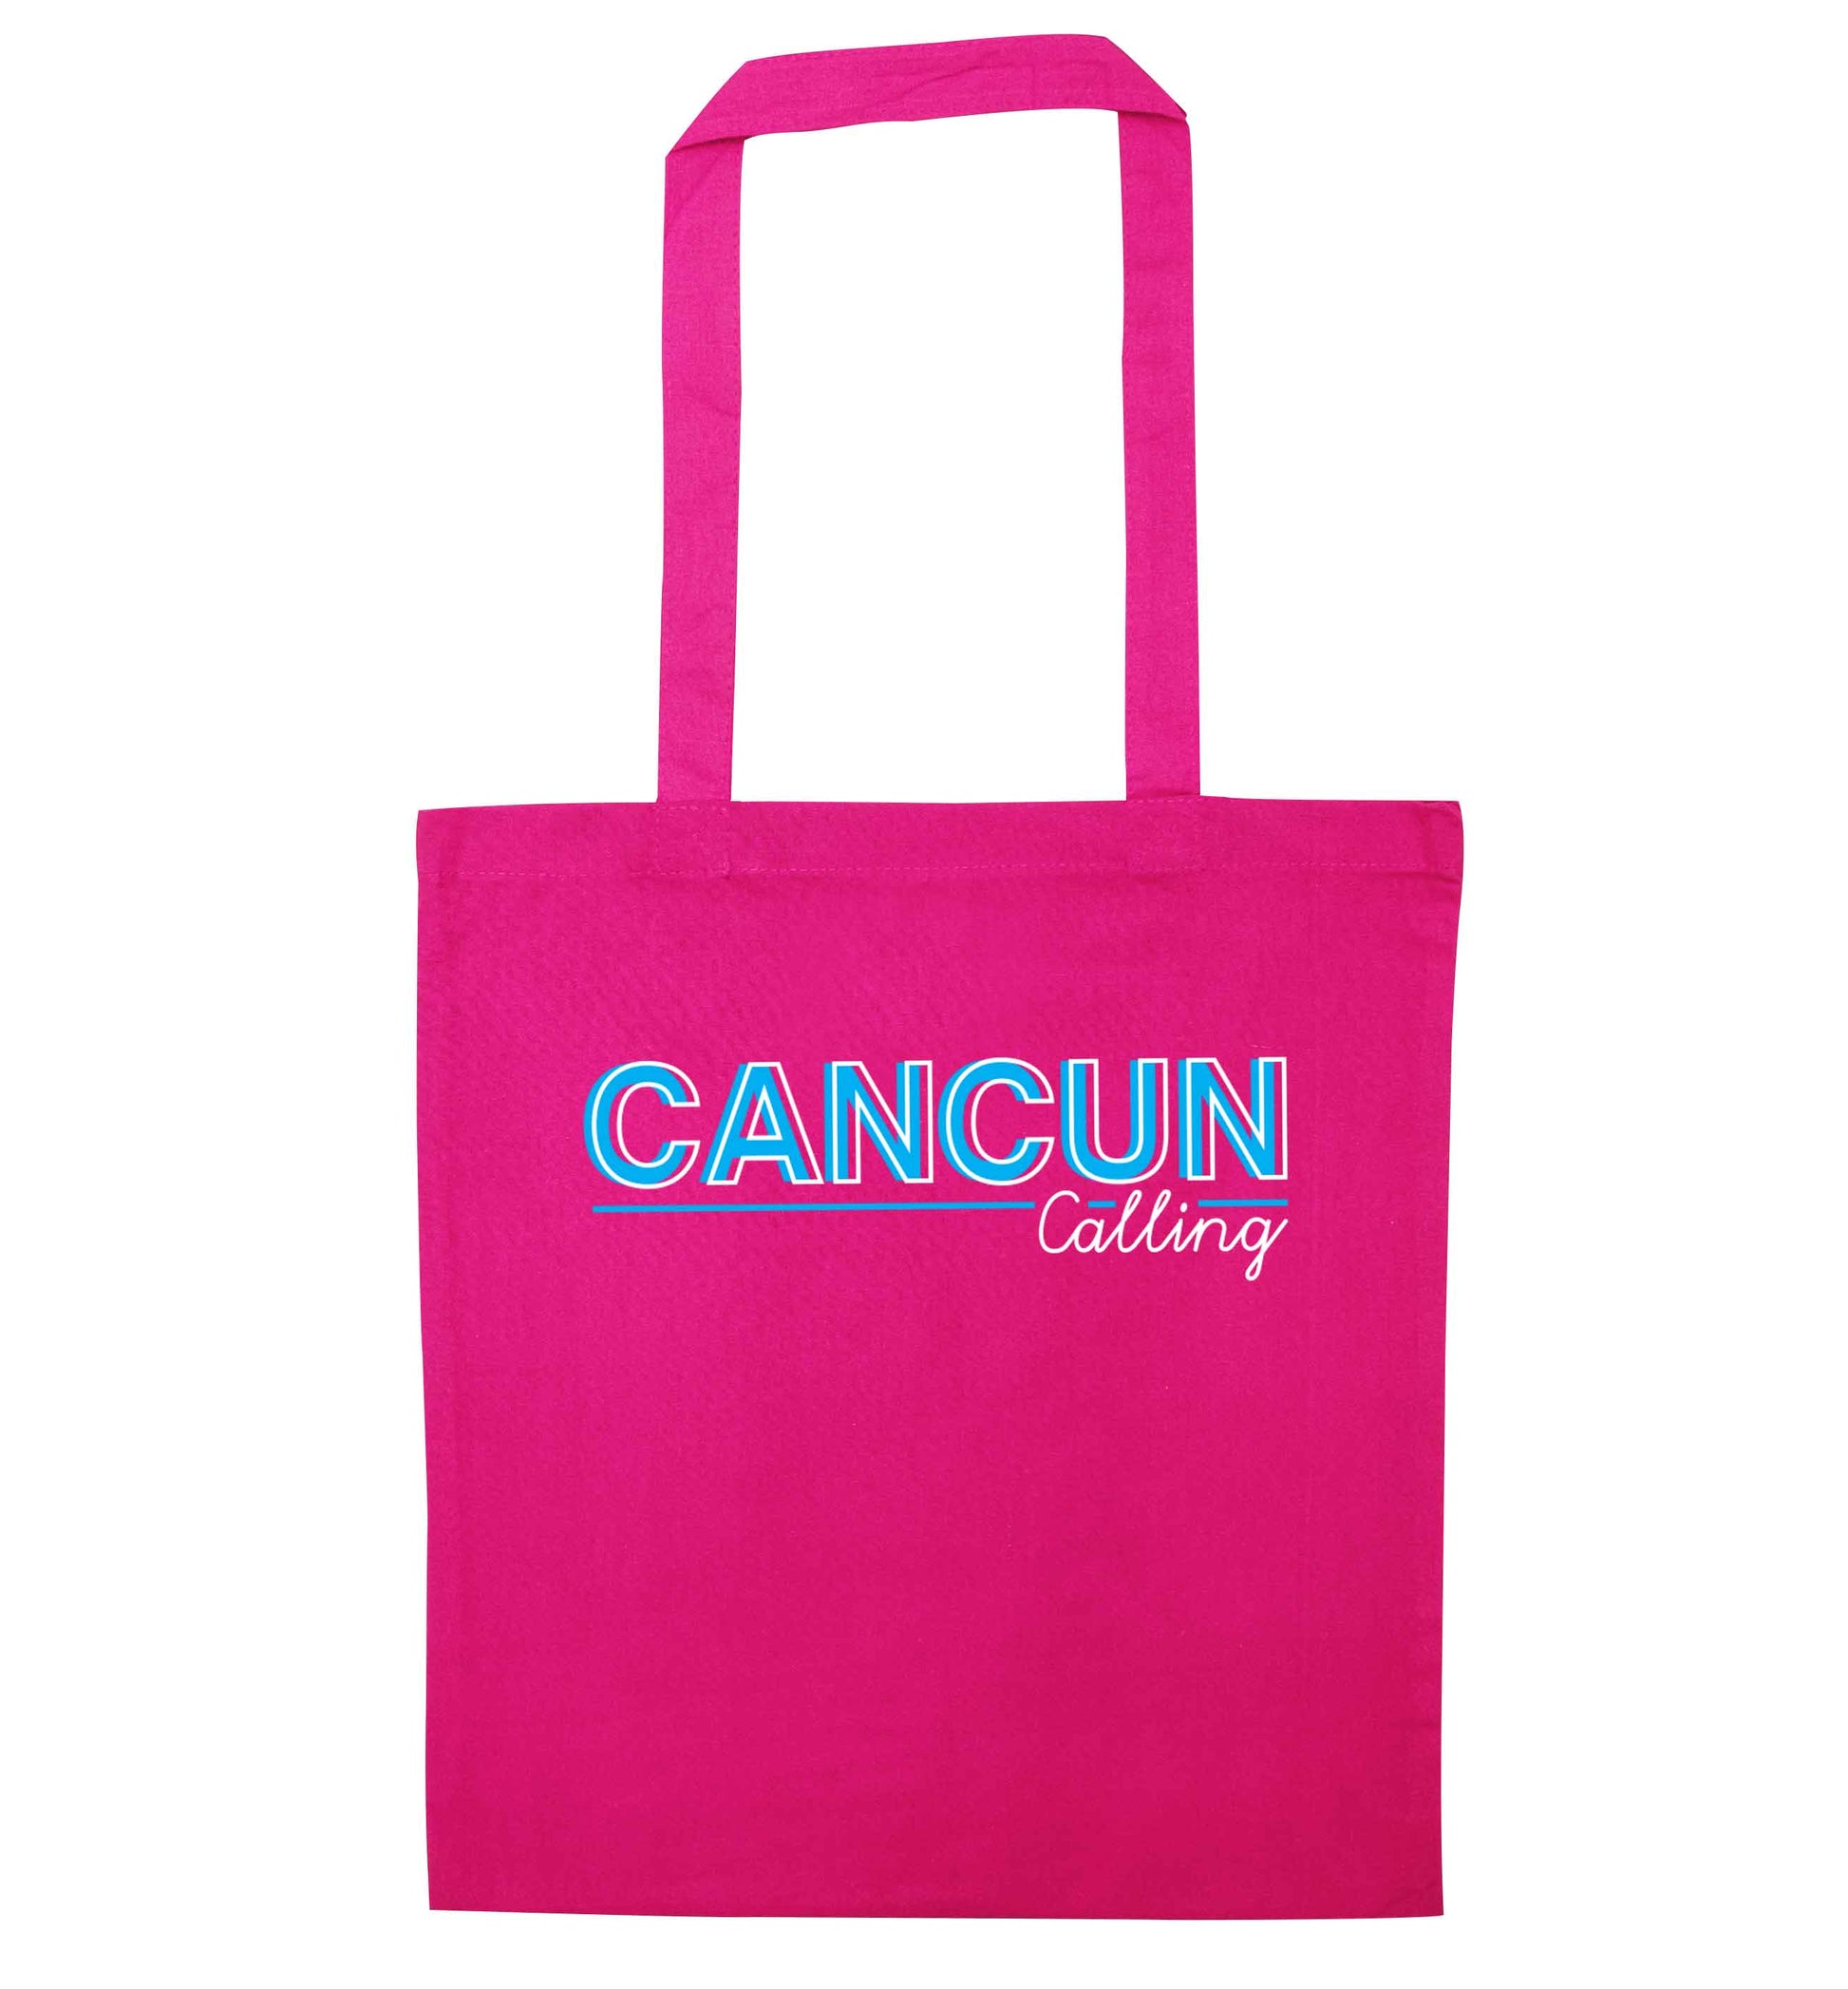 Cancun calling pink tote bag